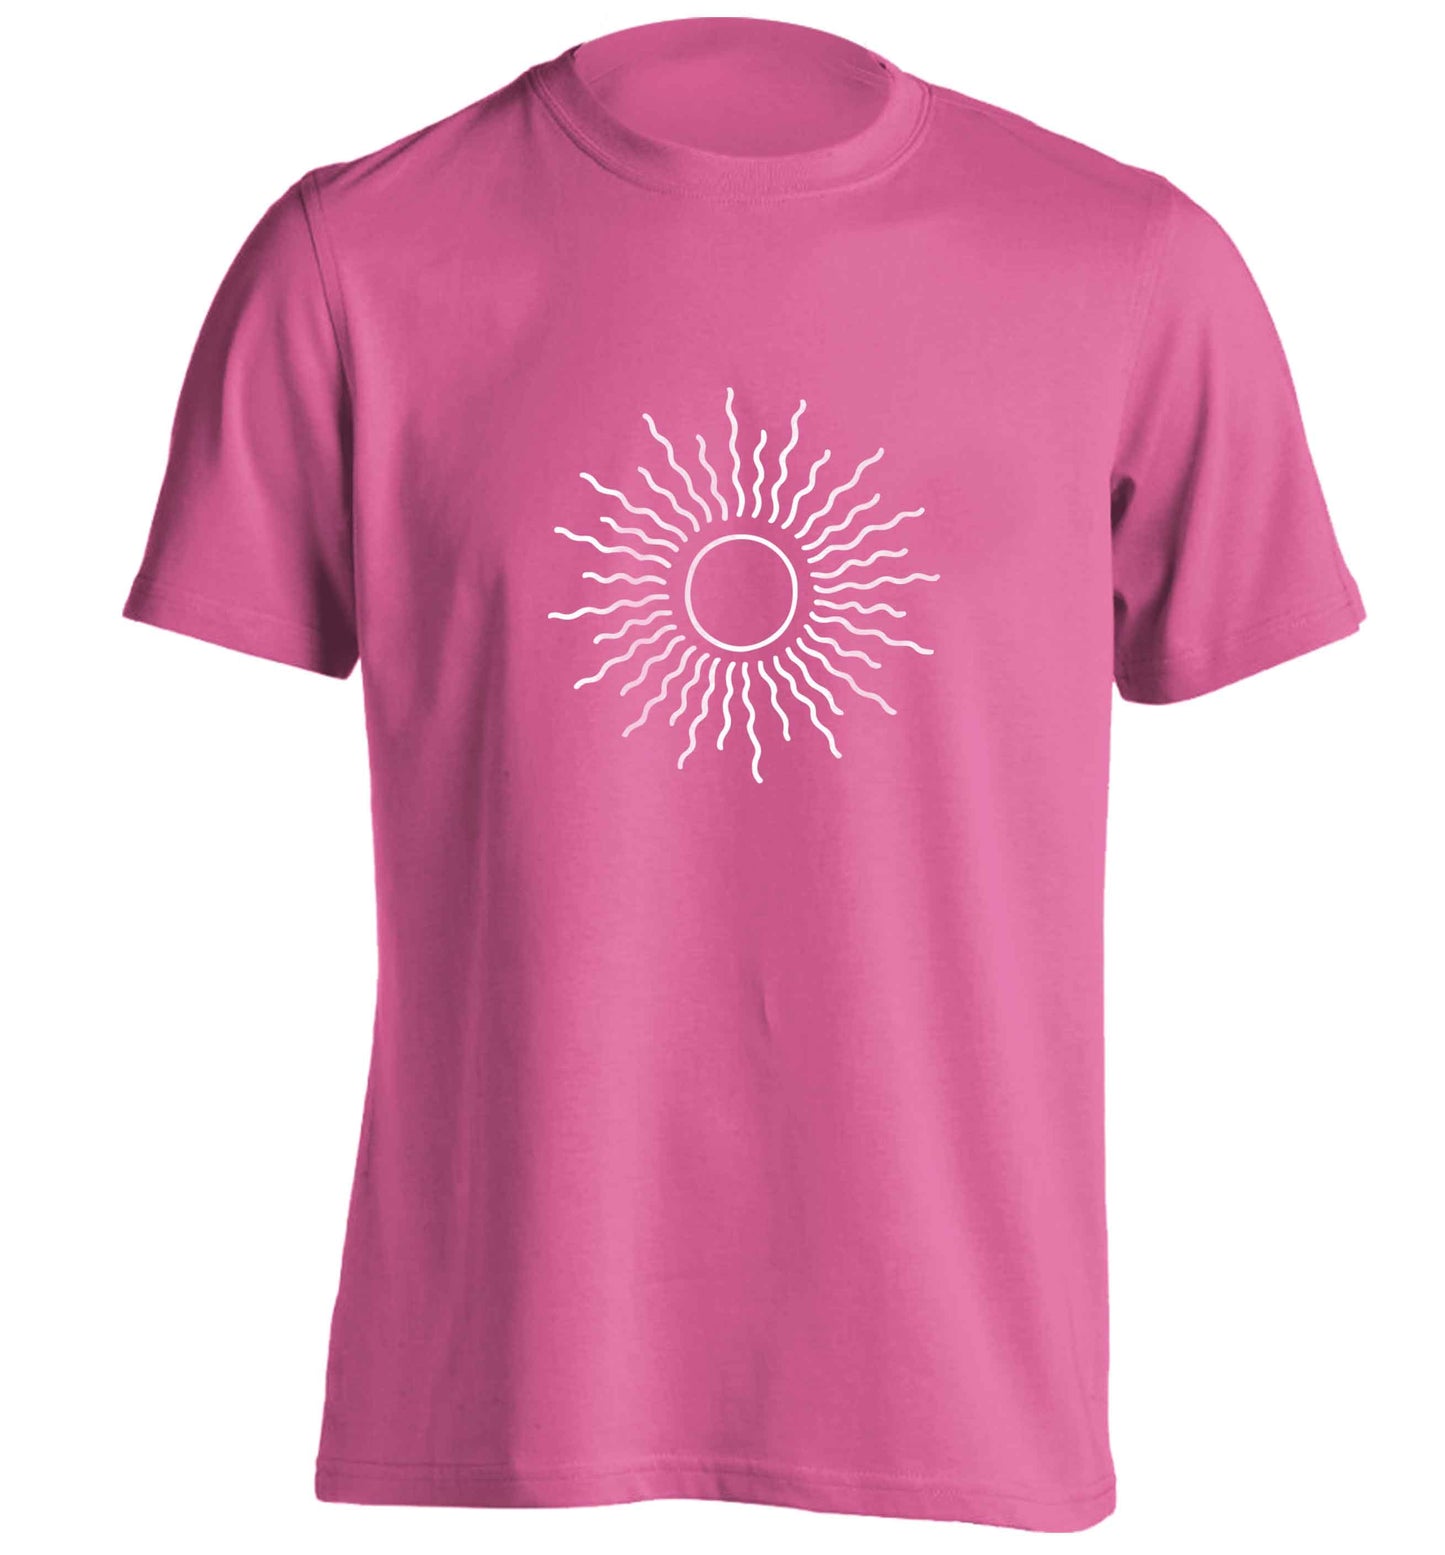 Sun illustration adults unisex pink Tshirt 2XL